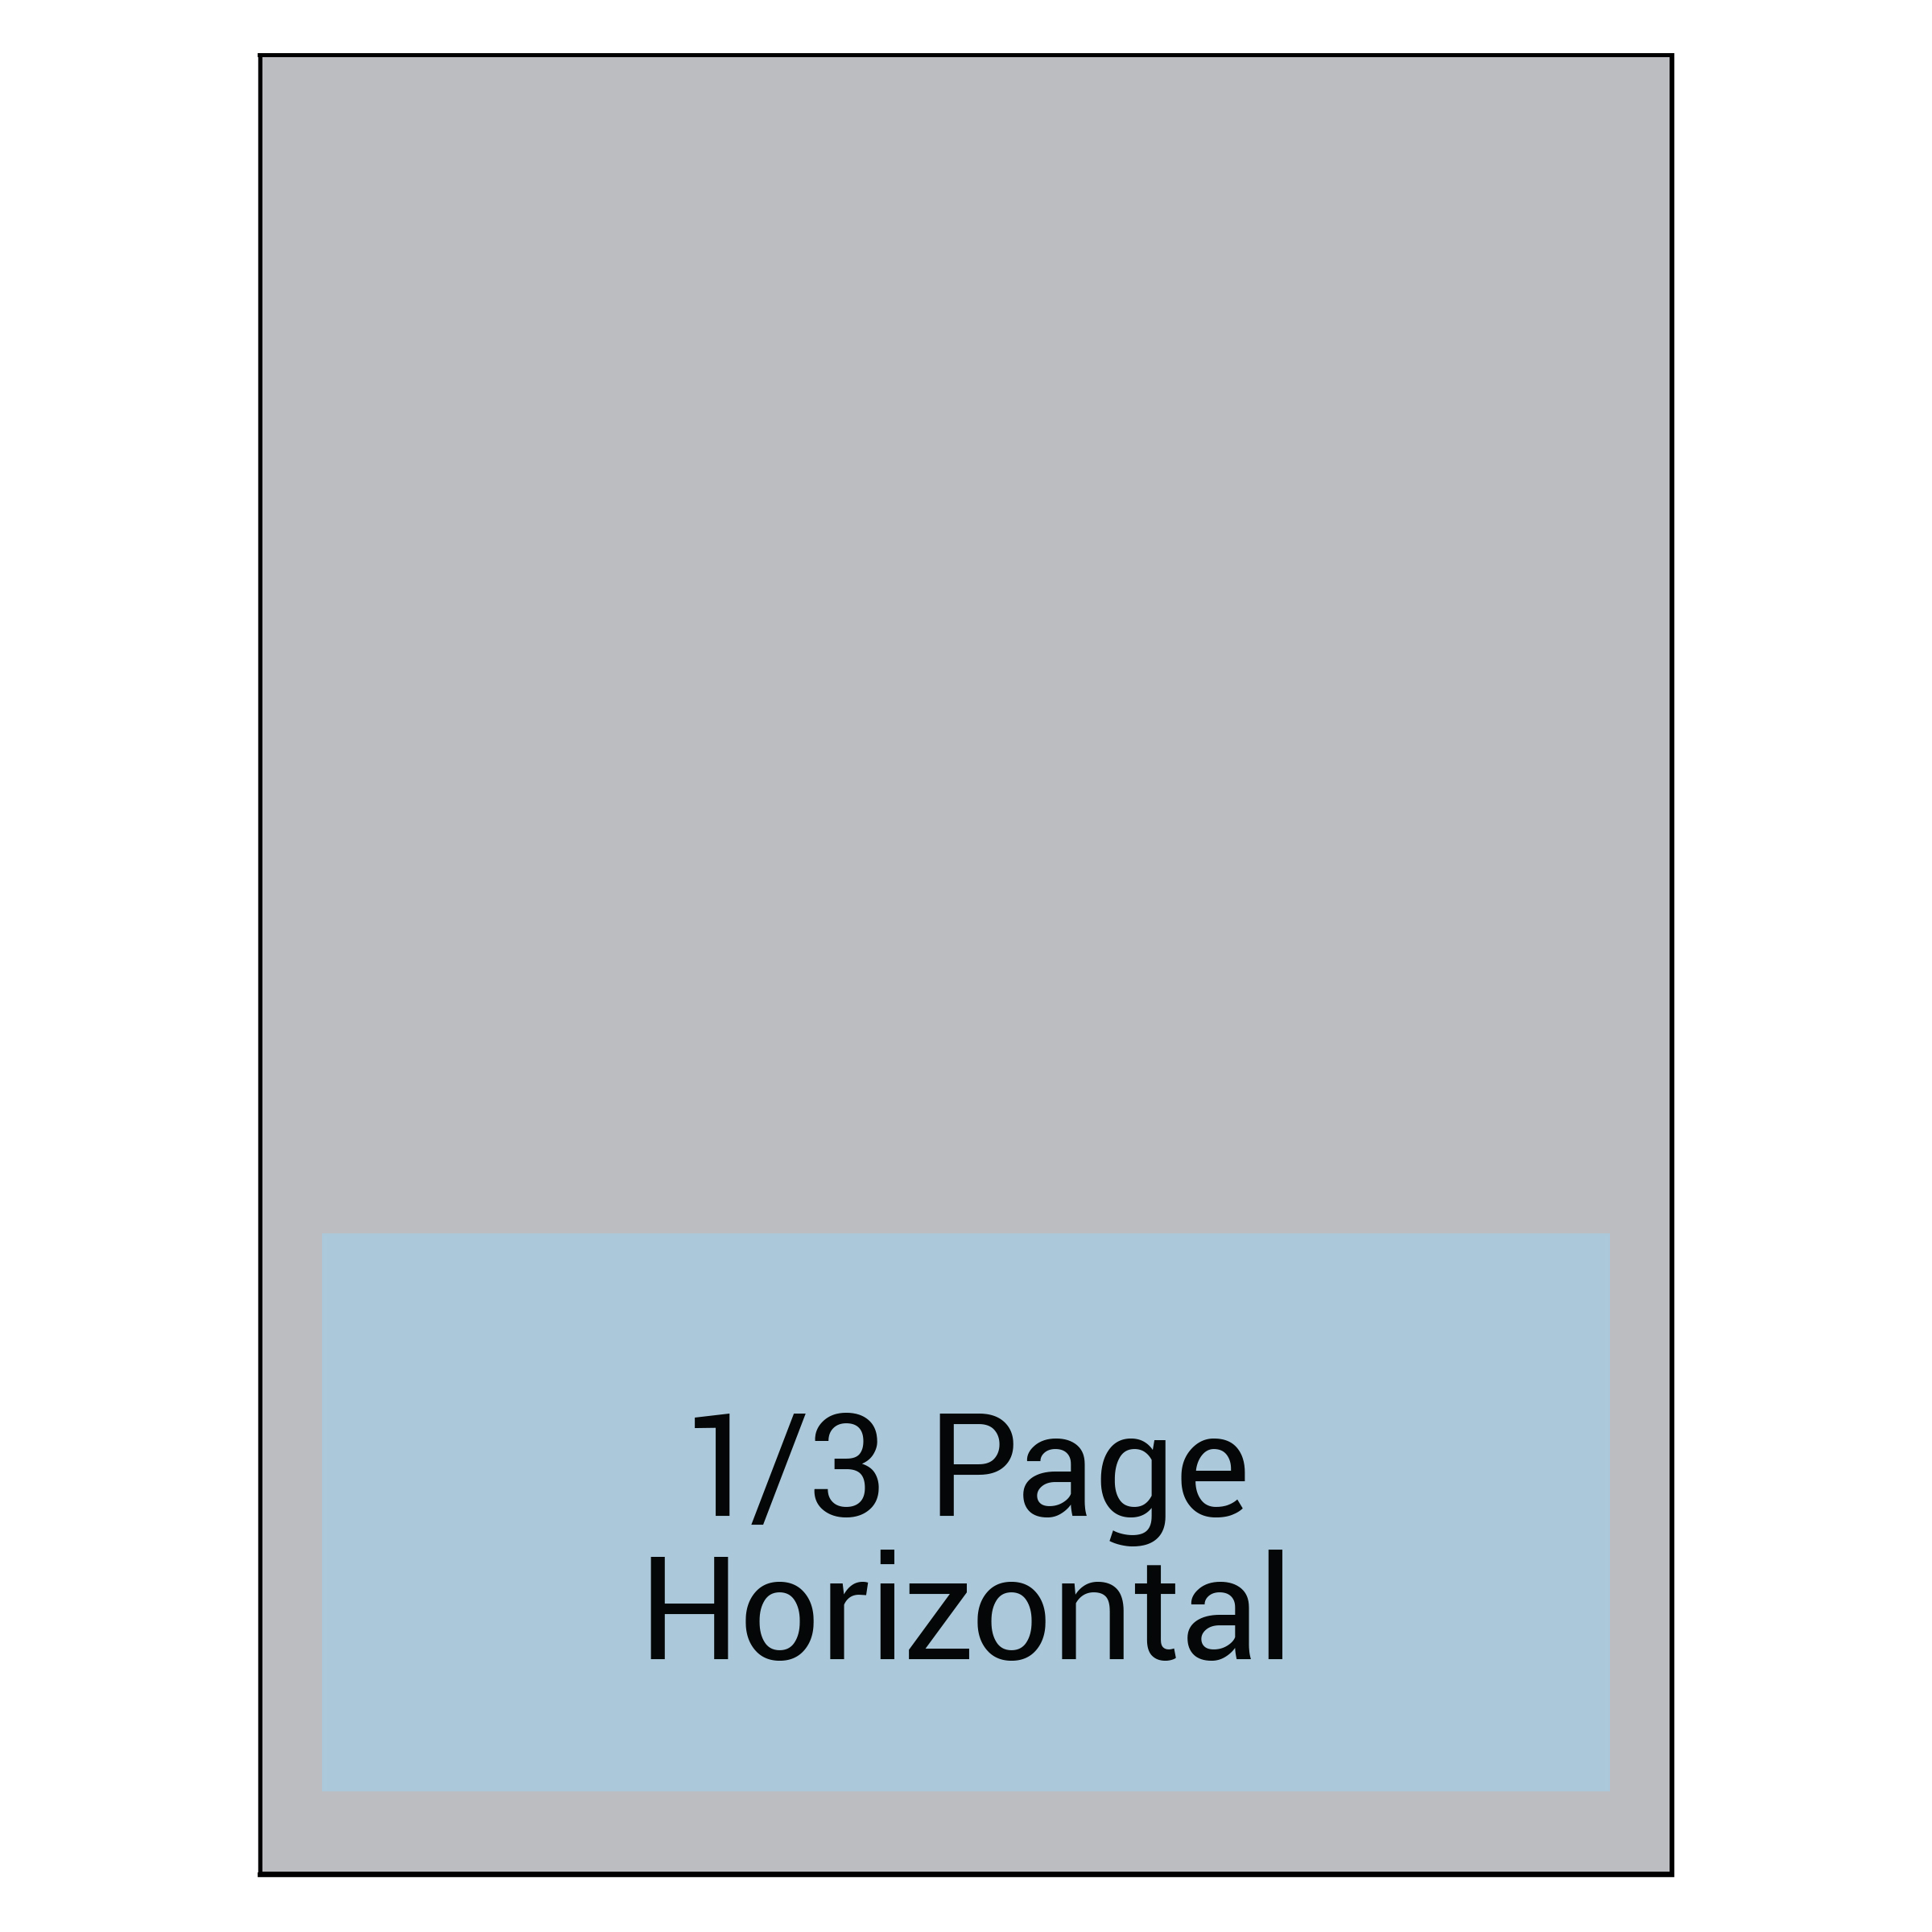 1/3 Page Horizontal